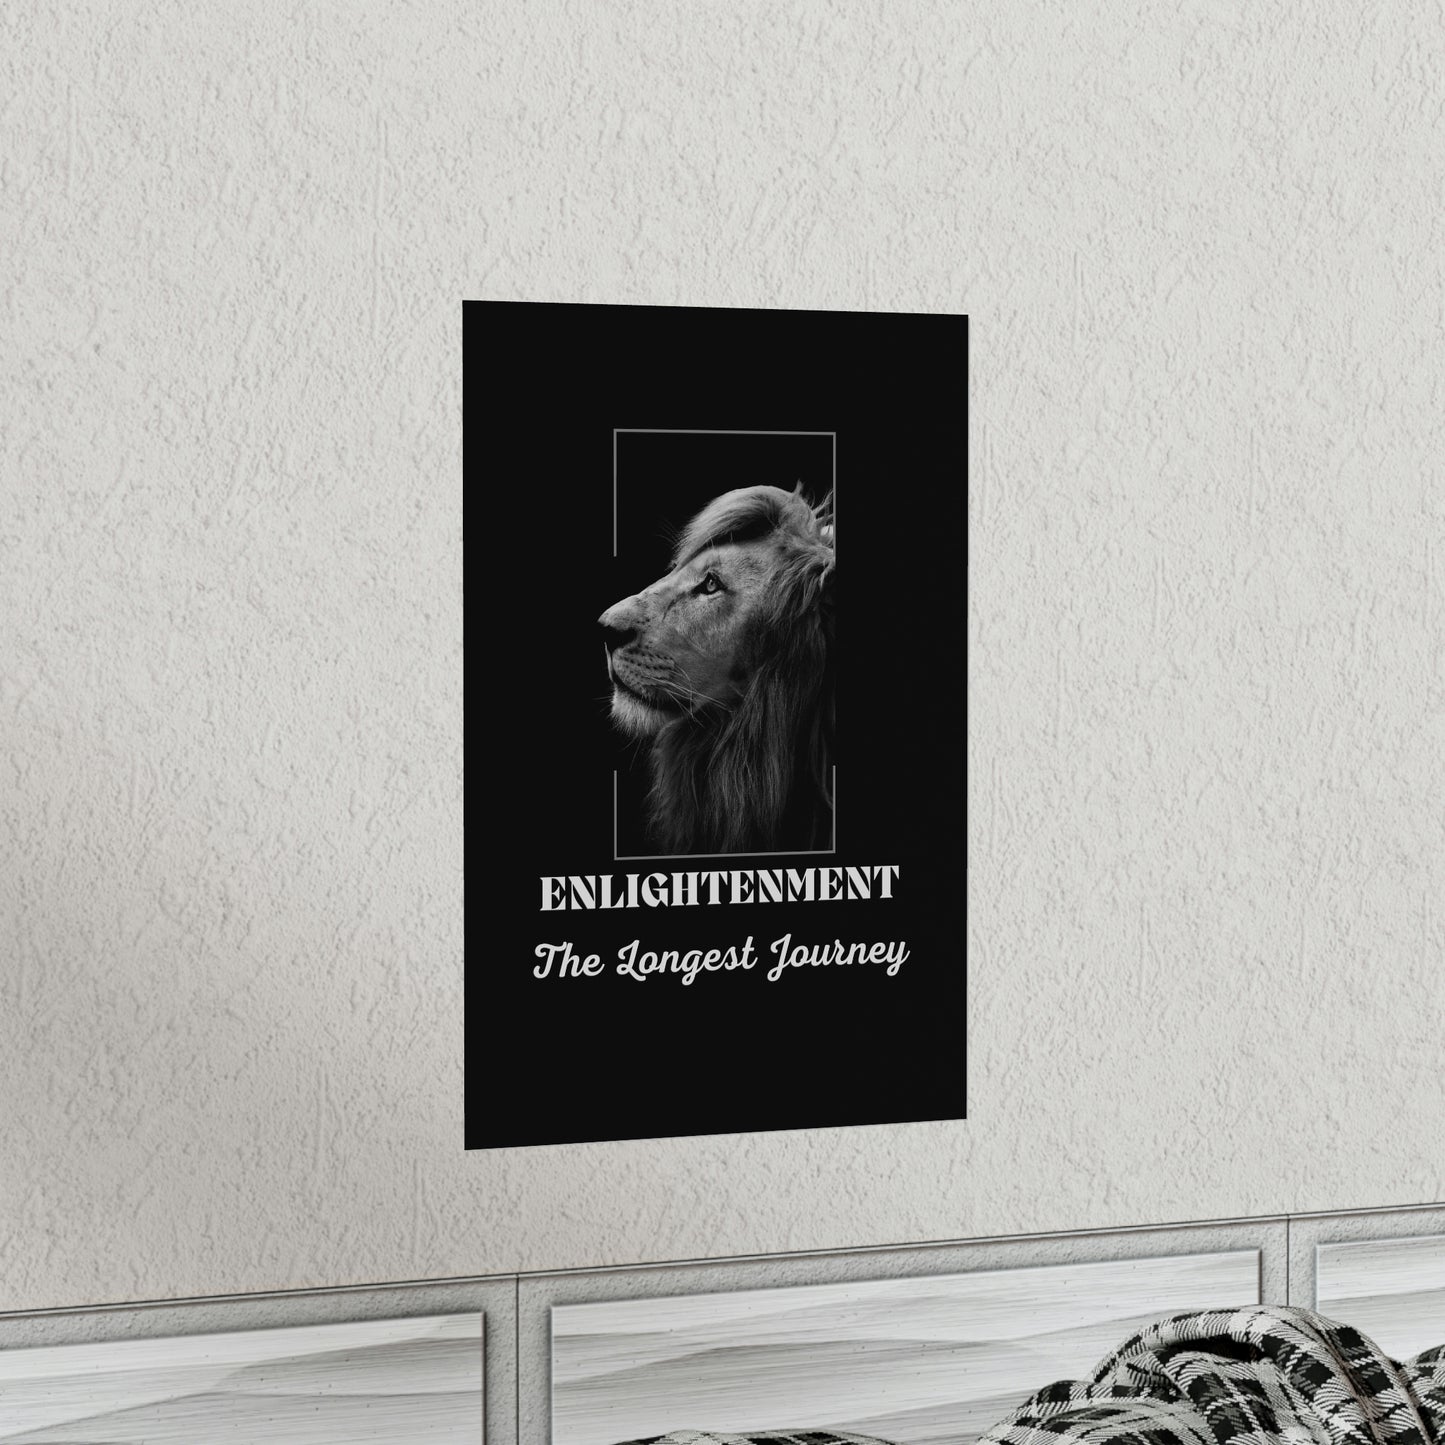 Premium Matte Vertical Posters - Enlightenment